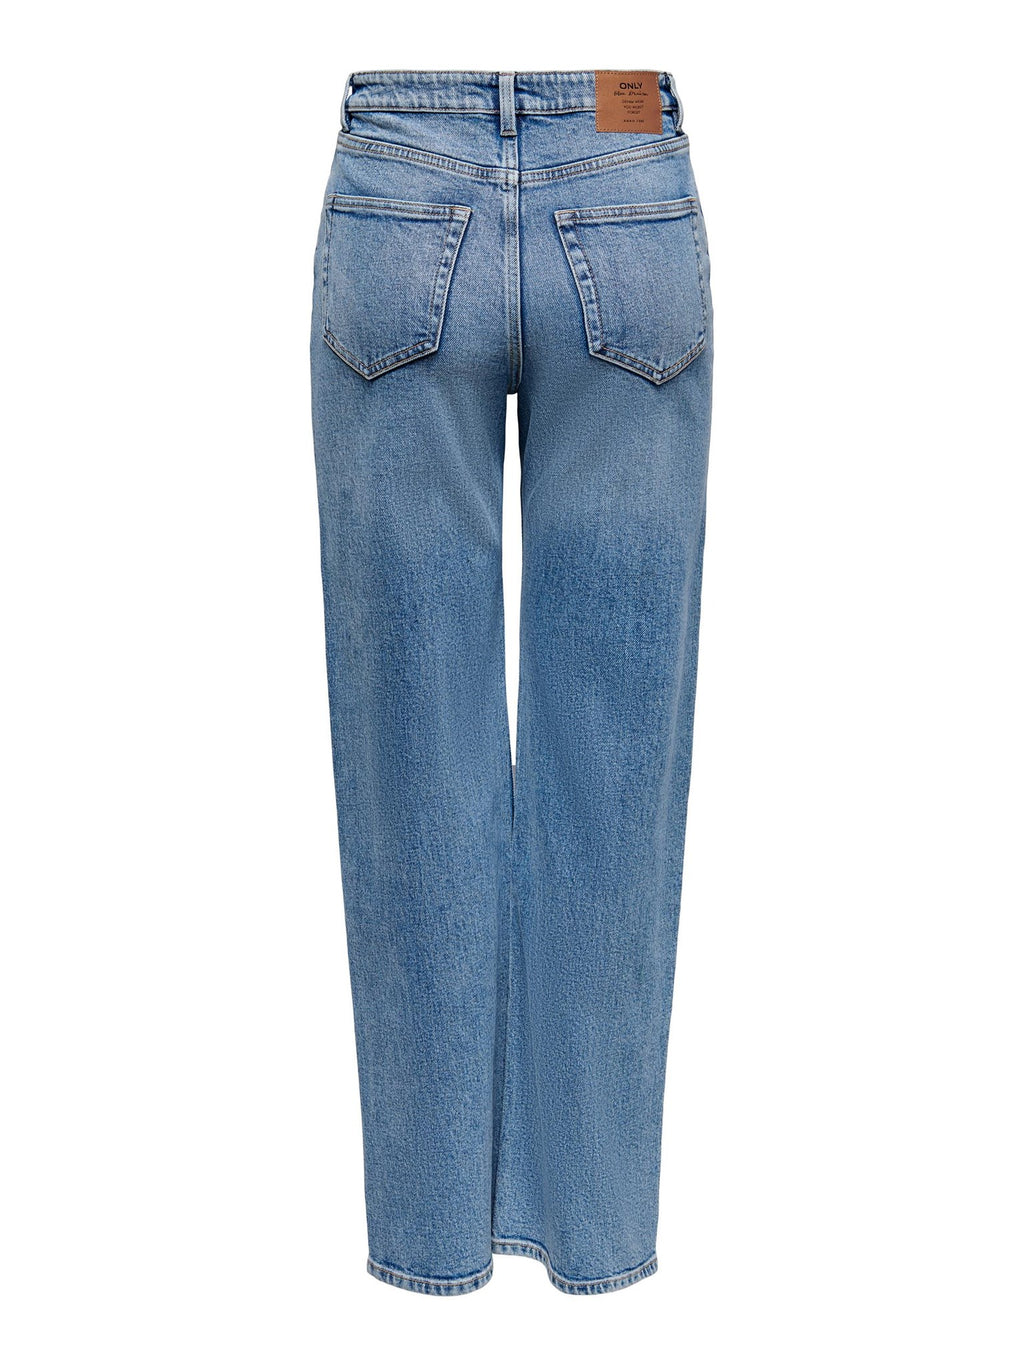 Juicy Jeans (wide leg) - Denim Blå